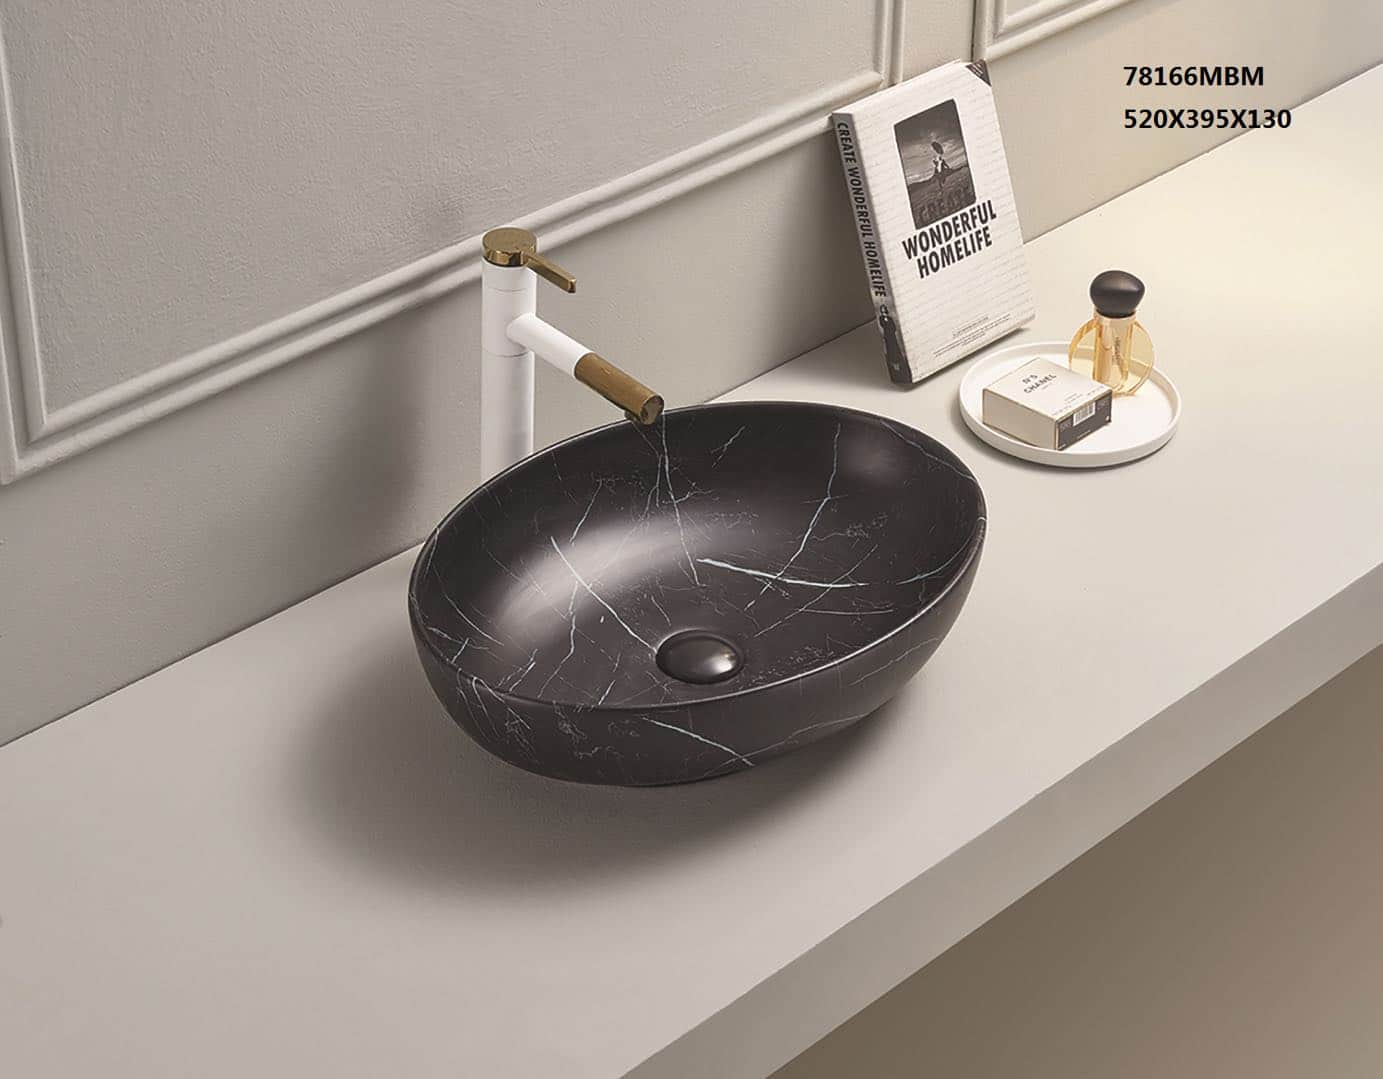 520x395x130mm Bathroom Wash Basin Oval Above Counter Matt Black Marble Surface Ceramic